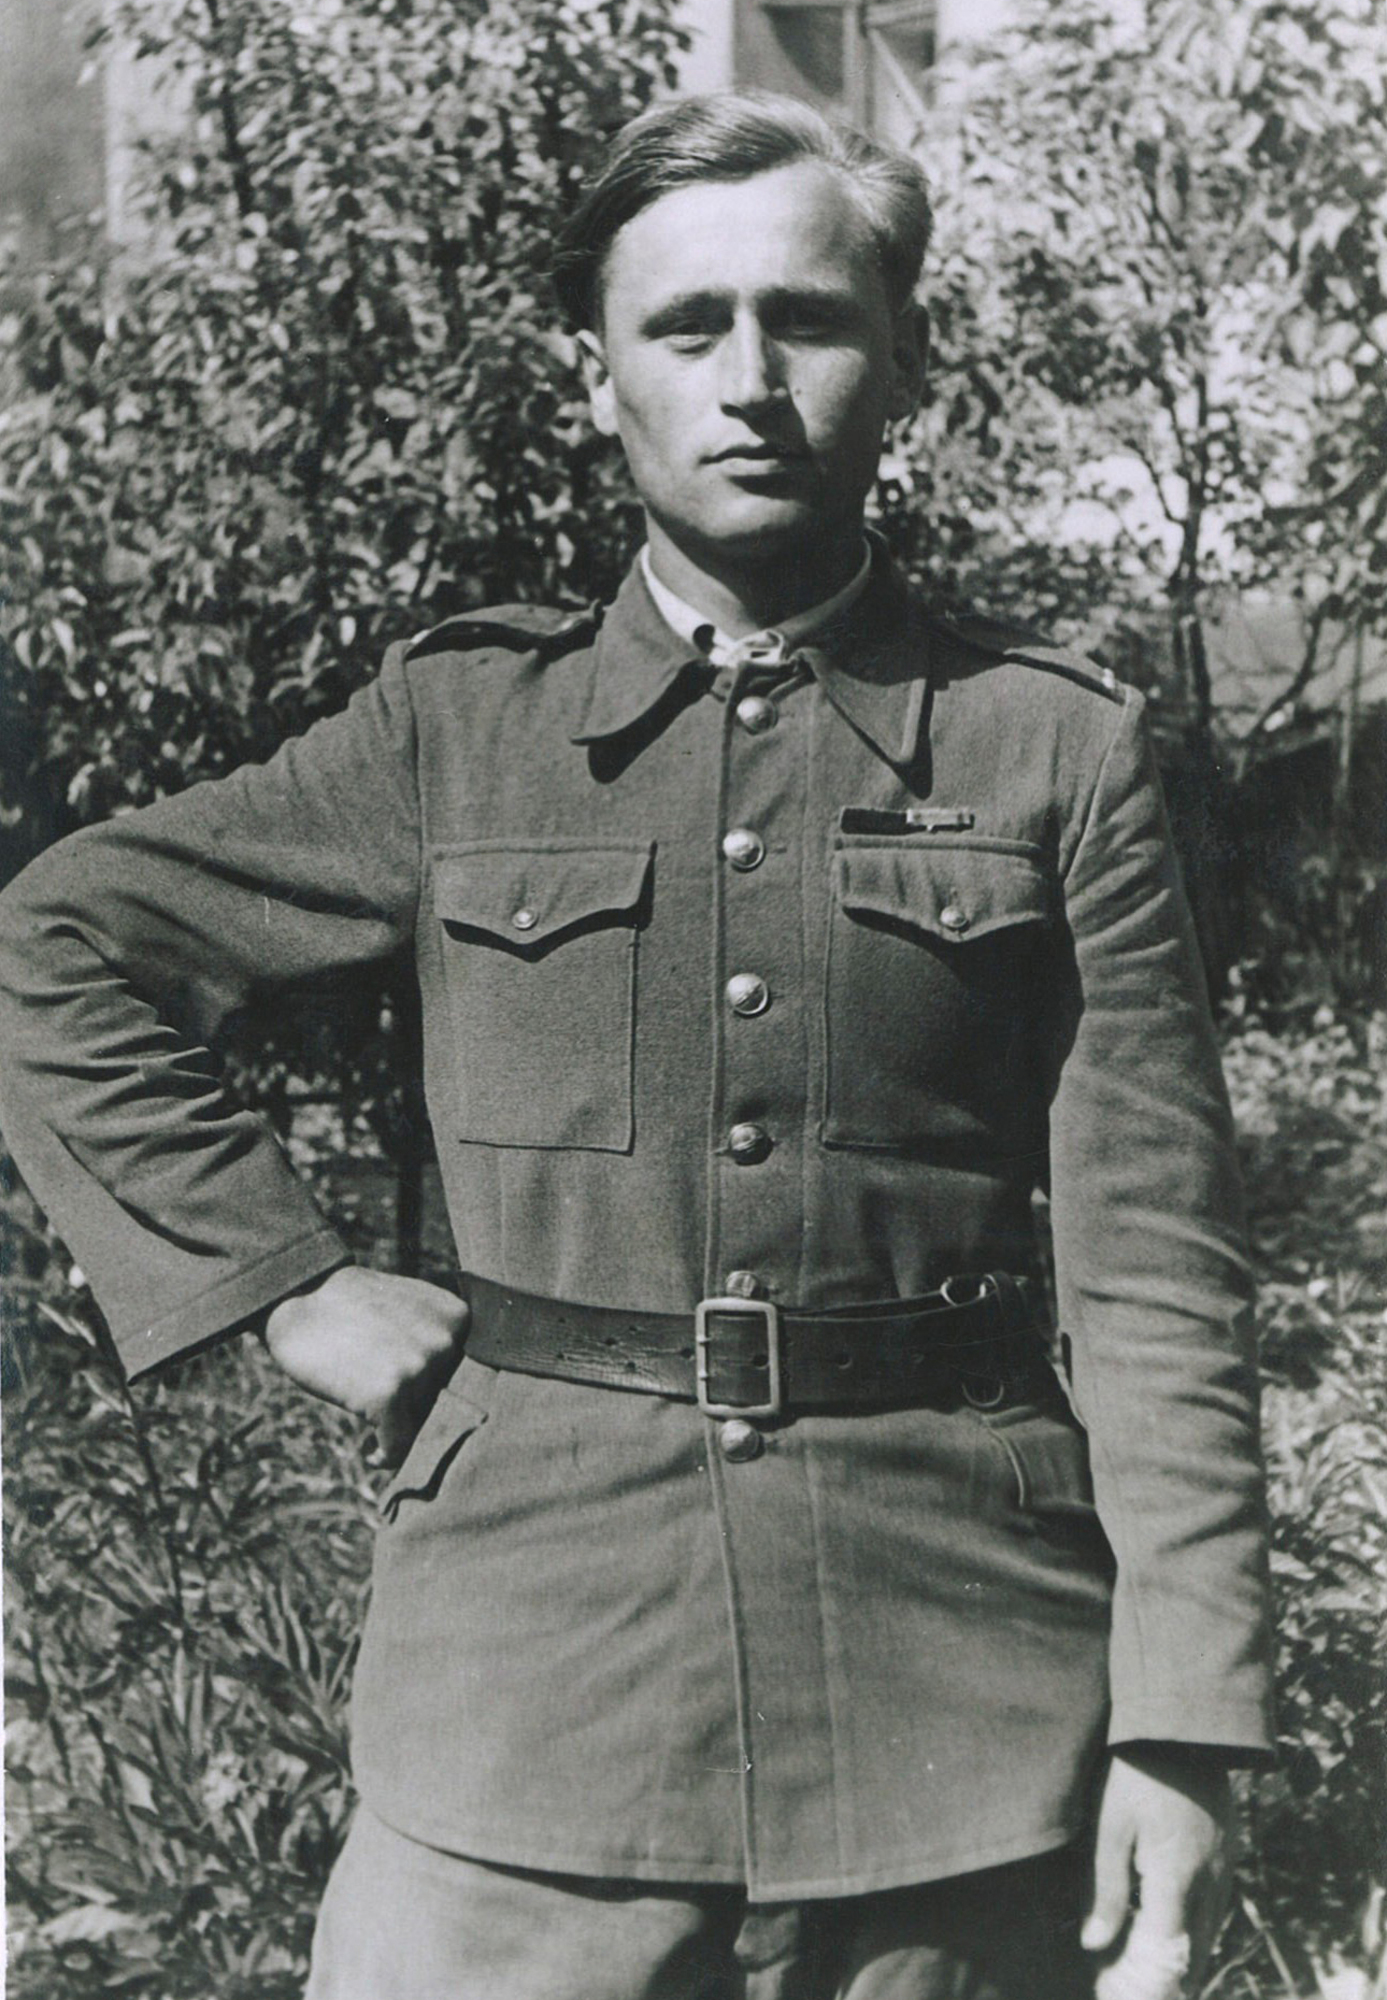 Michal Jvorcak in 1945